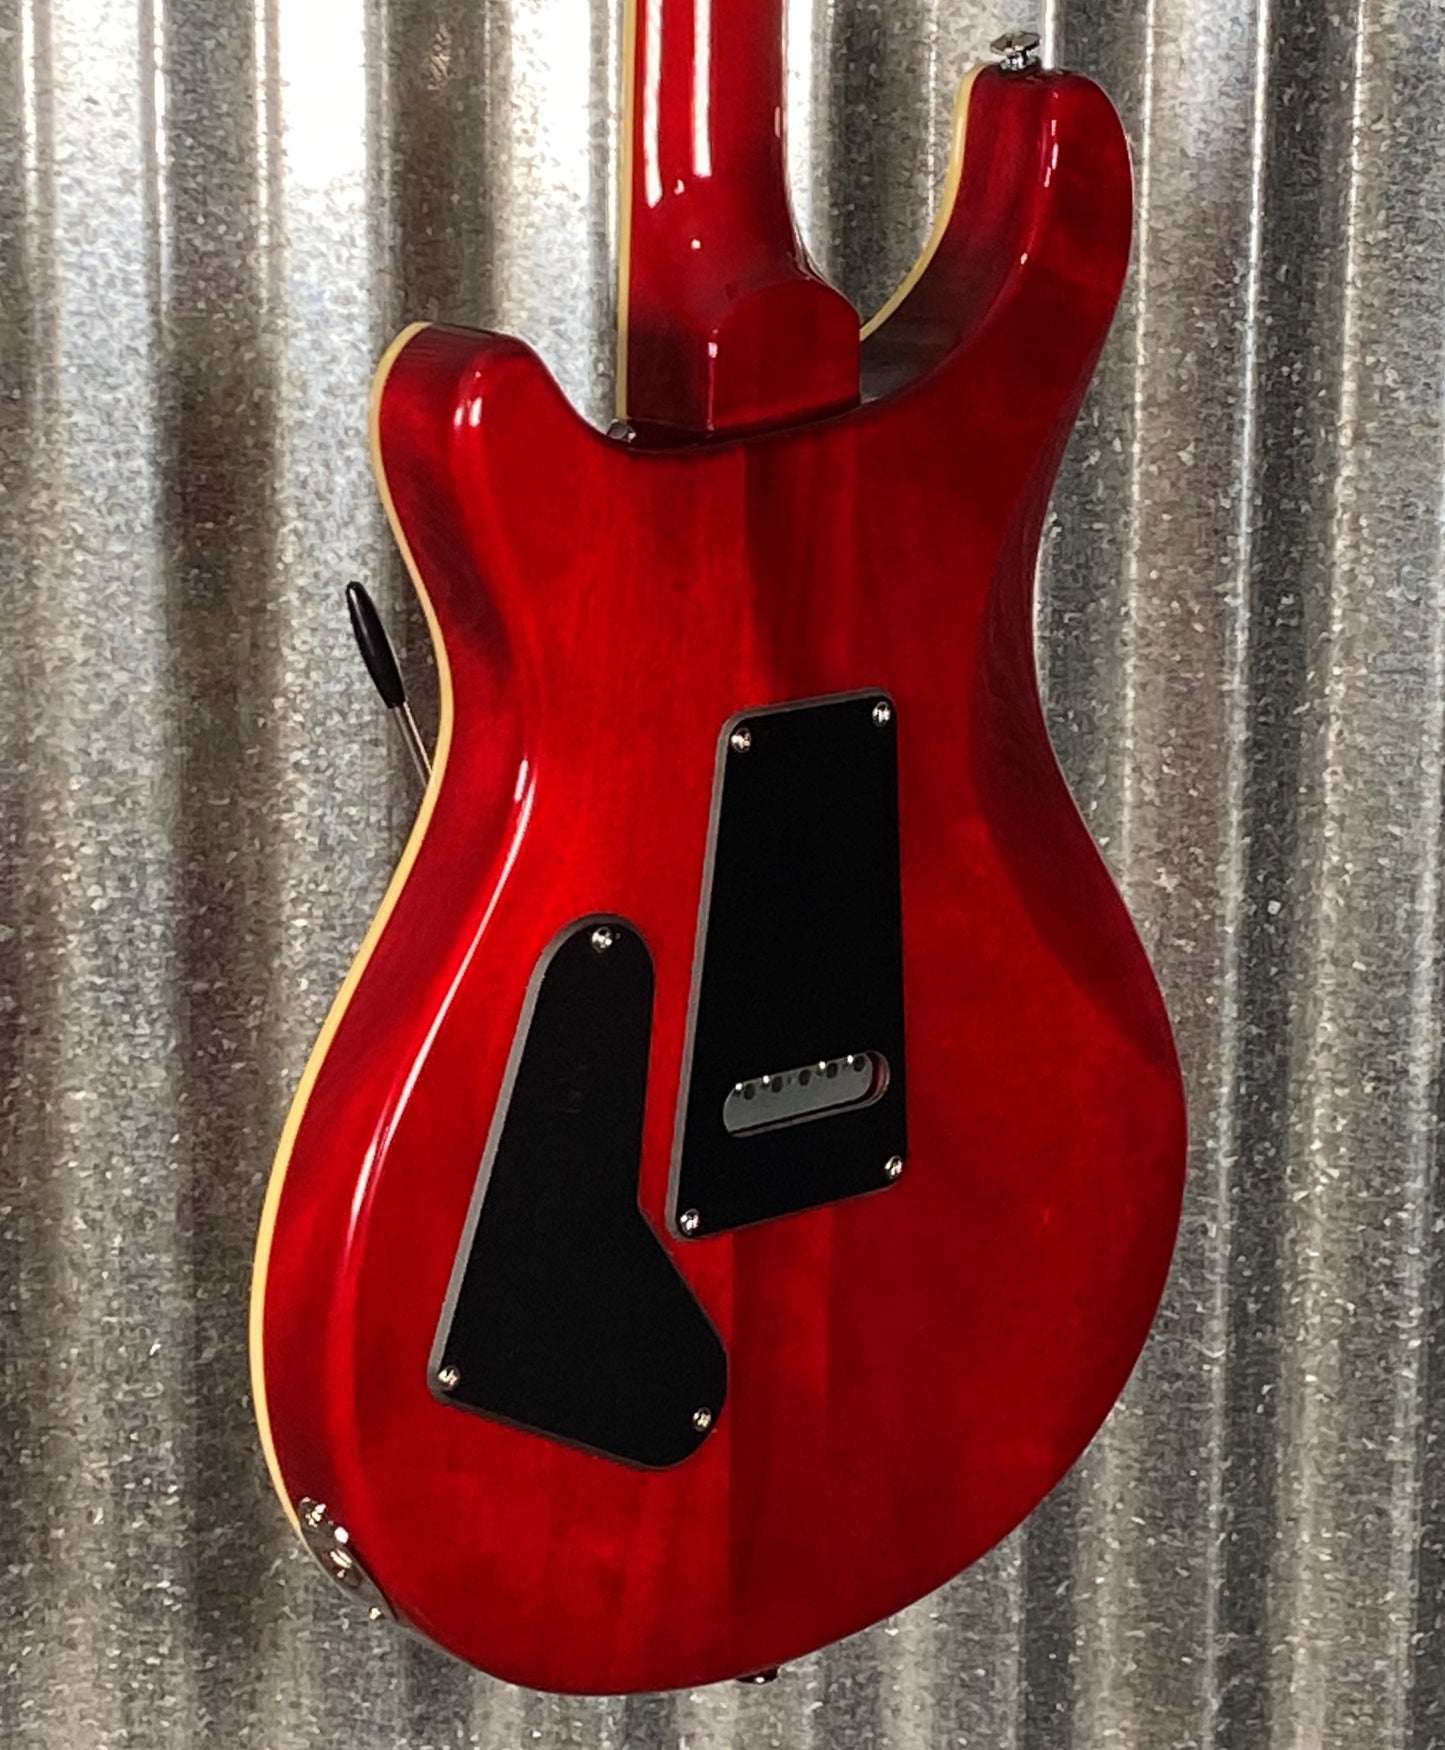 PRS Paul Reed Smith SE Standard 24 Top Carve Vintage Cherry Guitar & Bag #1100